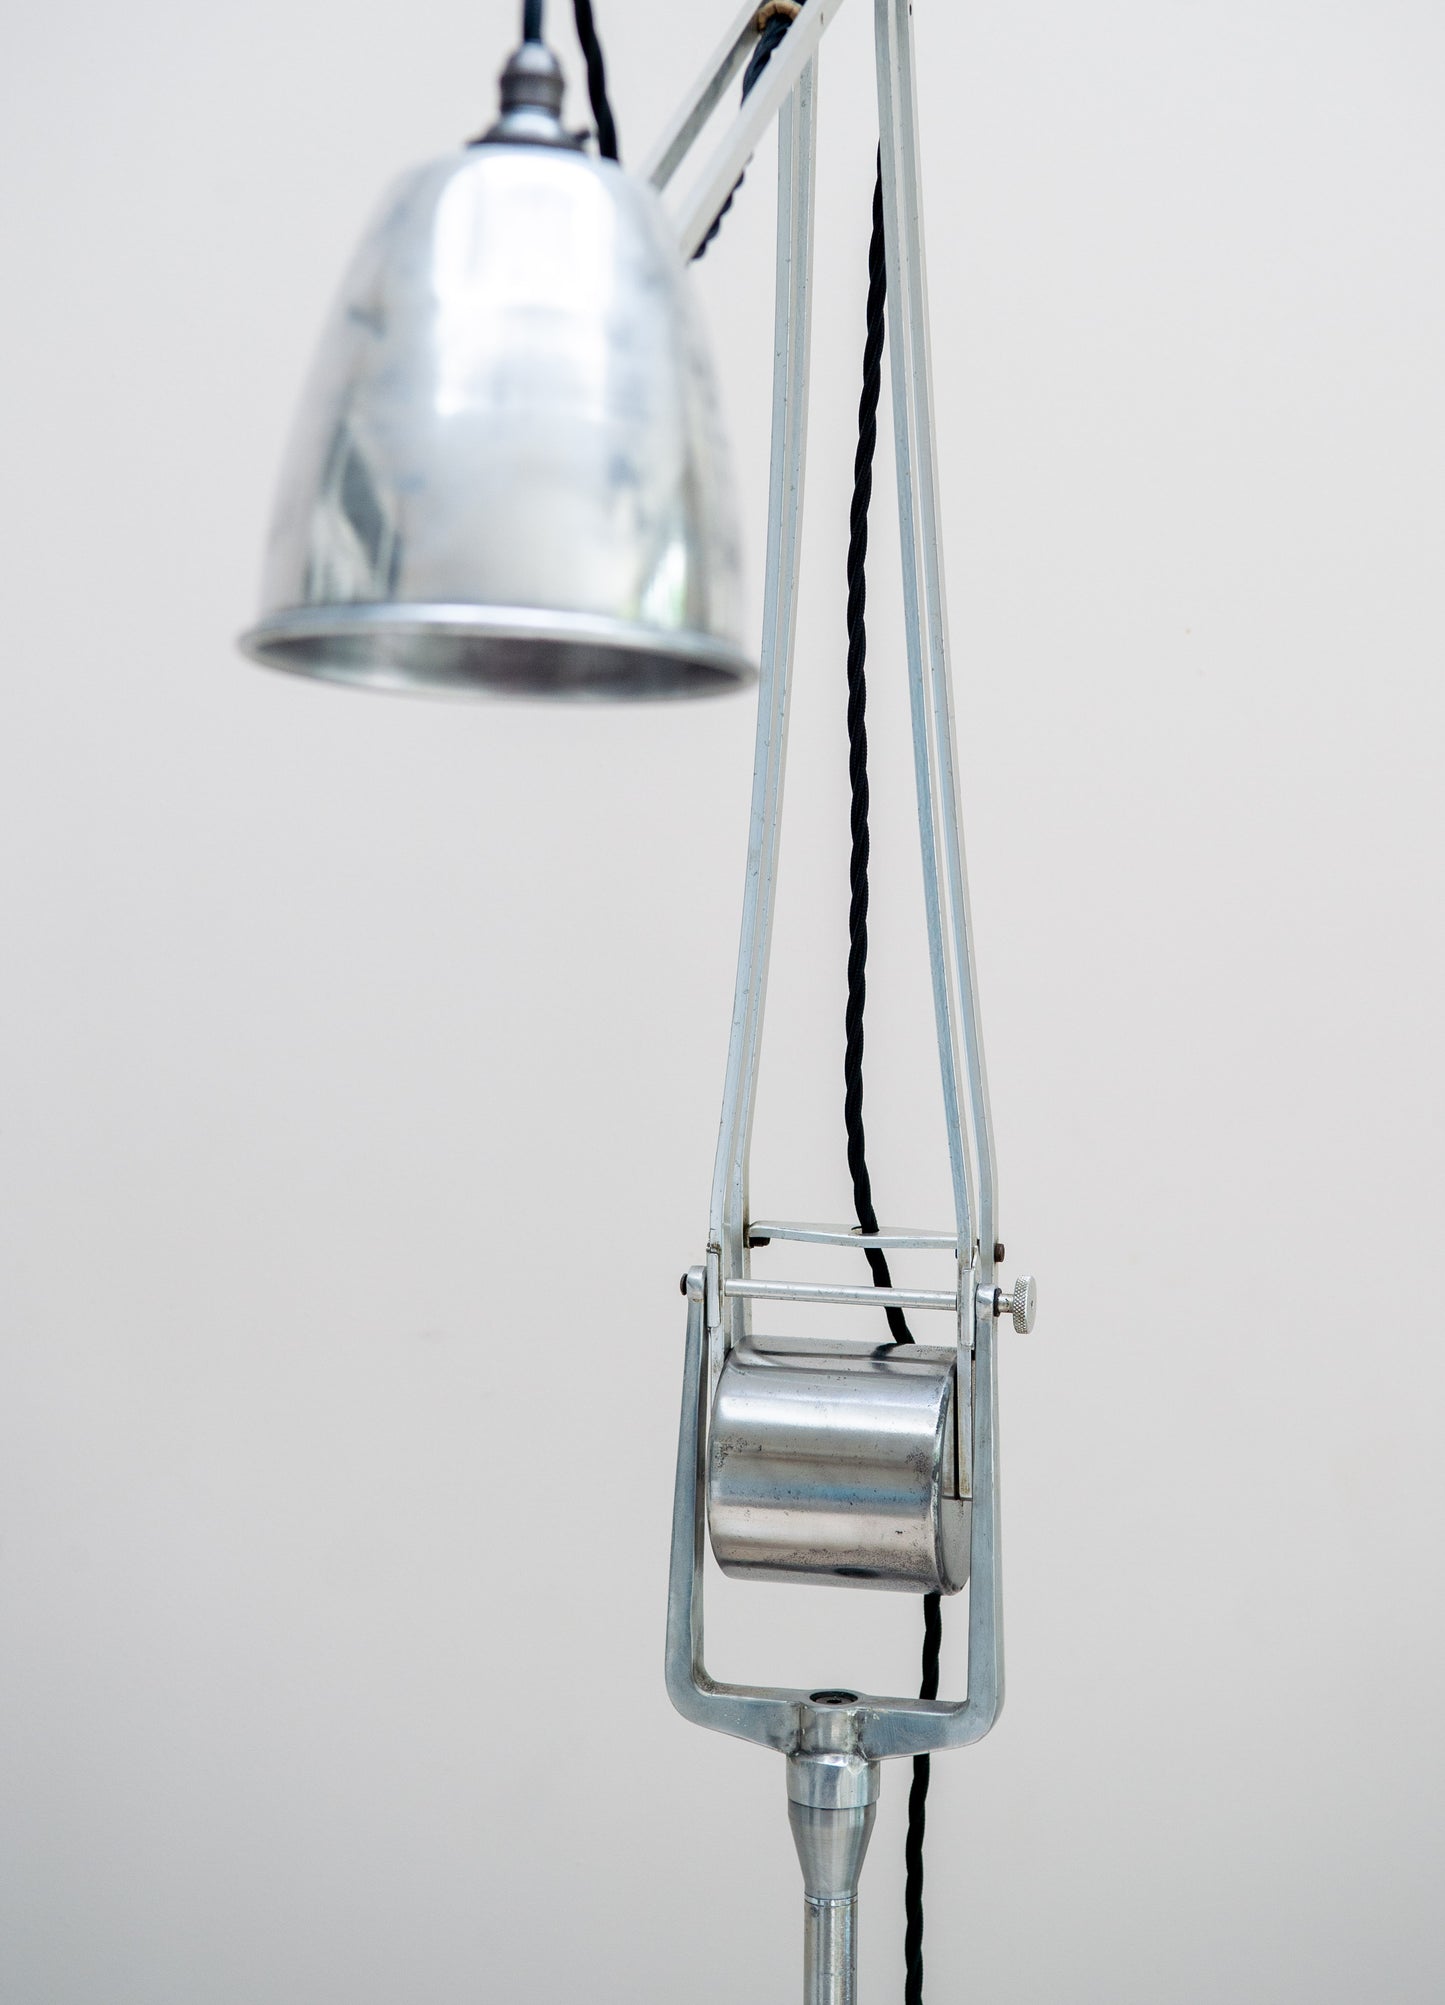 Hadrill & Horstmann "Roller" counter balanced Lamp Bouyer stand. ENGLISH 1950's